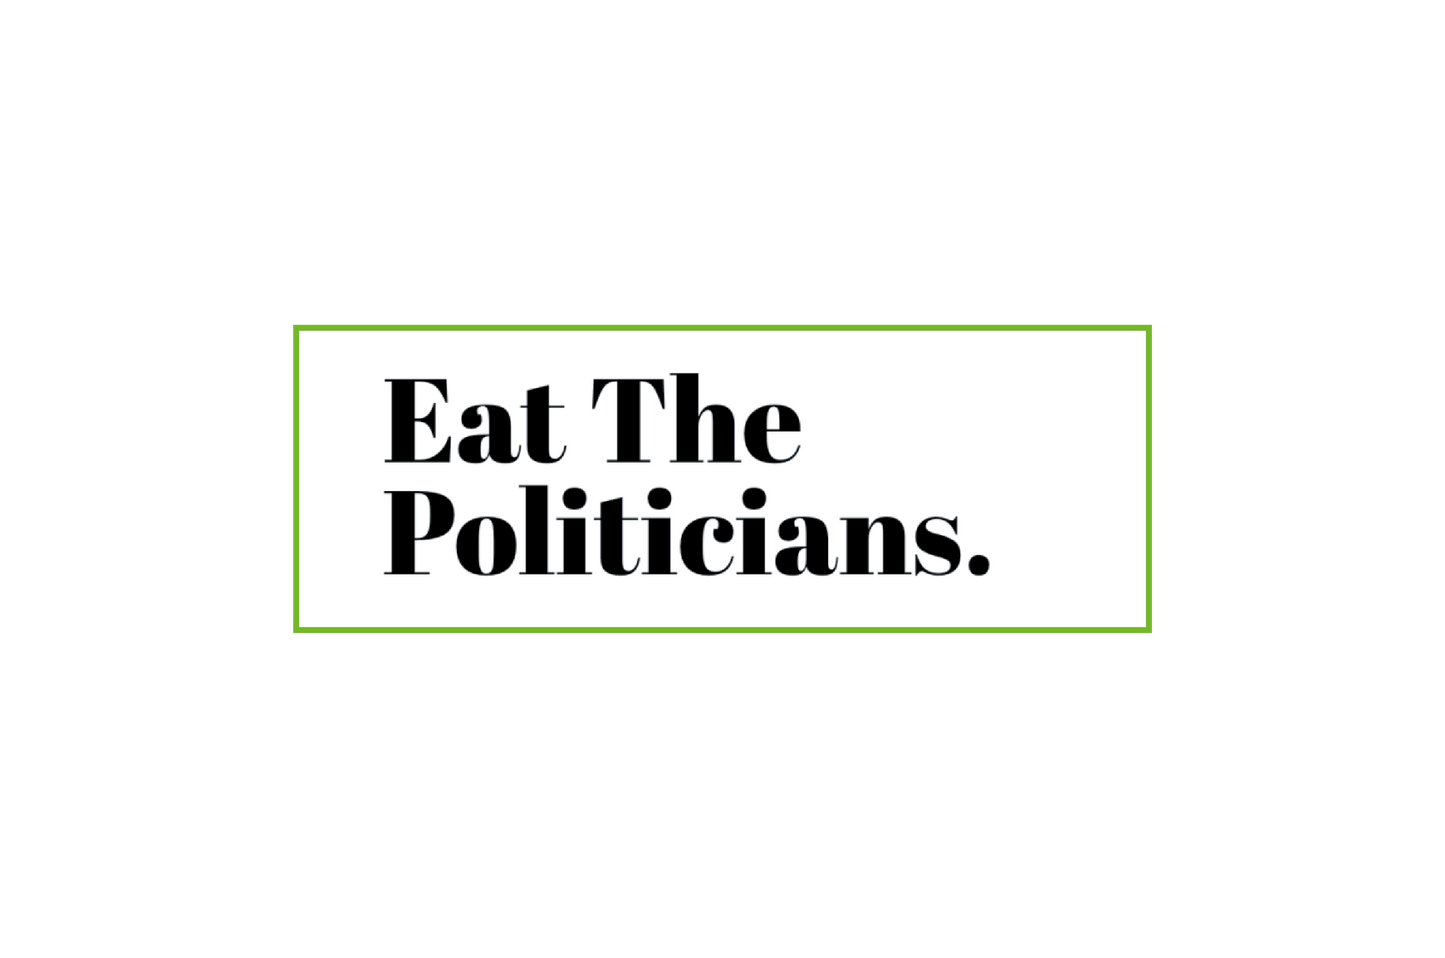 Eat the politicians